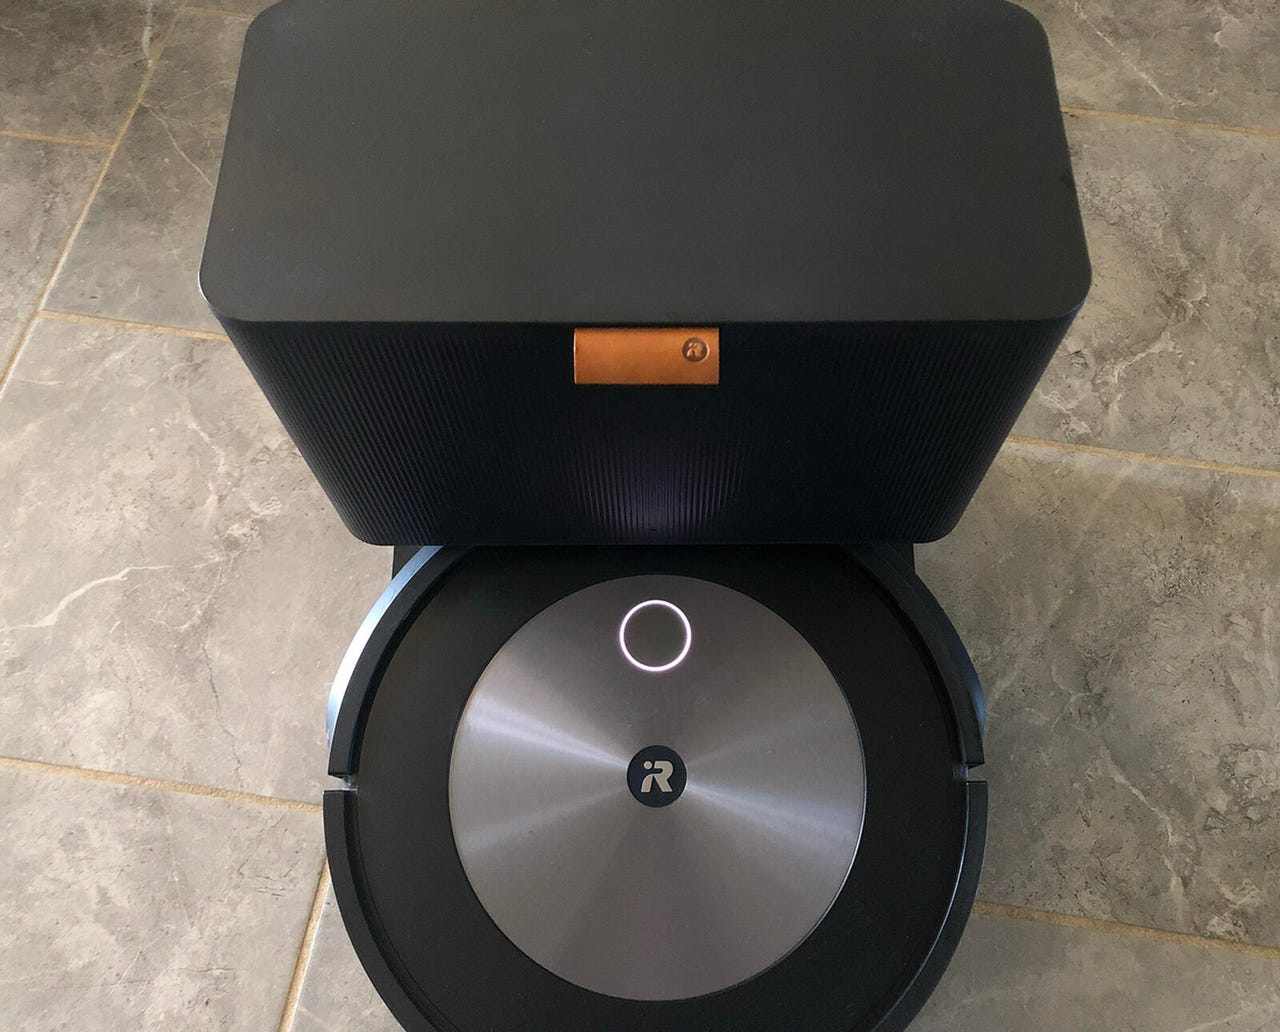 iRobot Roomba J7 specifications